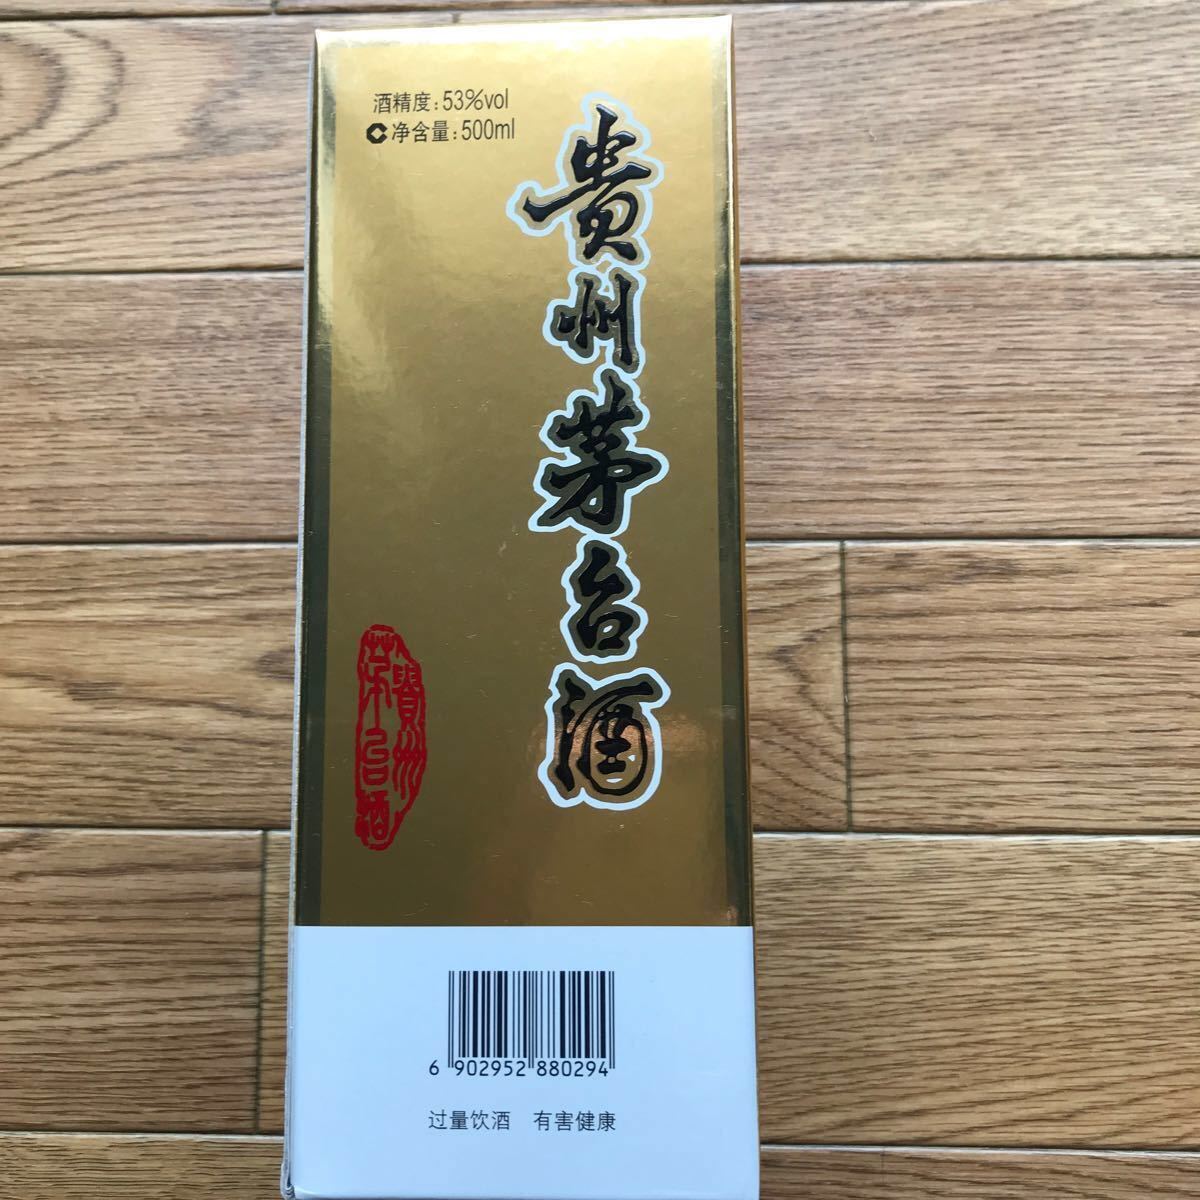 貴州茅台酒Moutai53%500 ml2013年